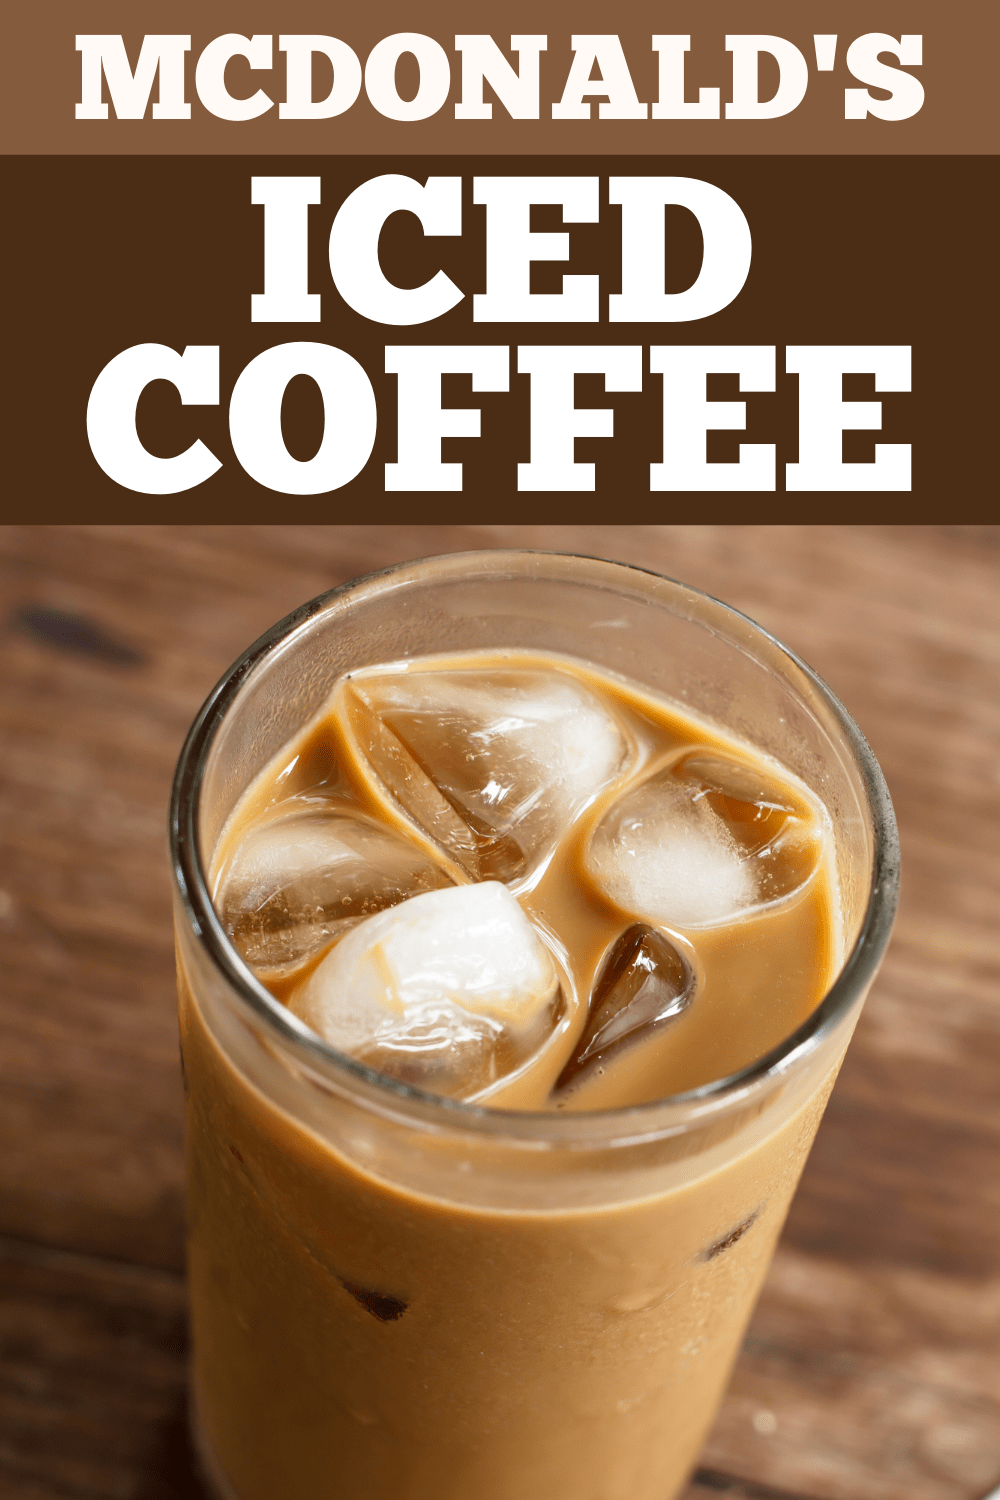 iced coffee caffeine content